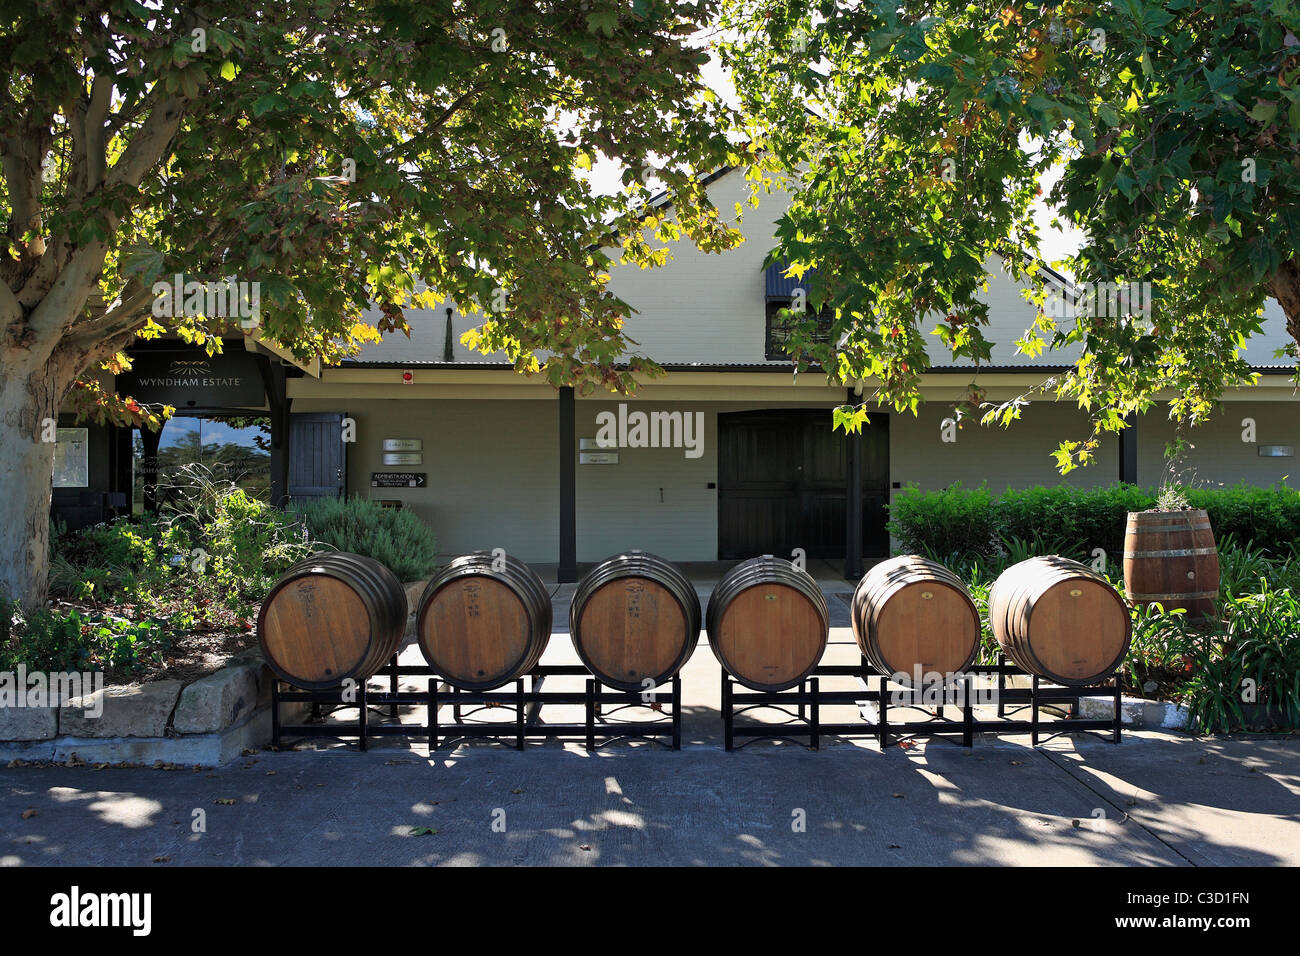 Wine barrels and Cellar Door at Wyndham Estate, Hunter Valley NSW, Australia Stock Photo